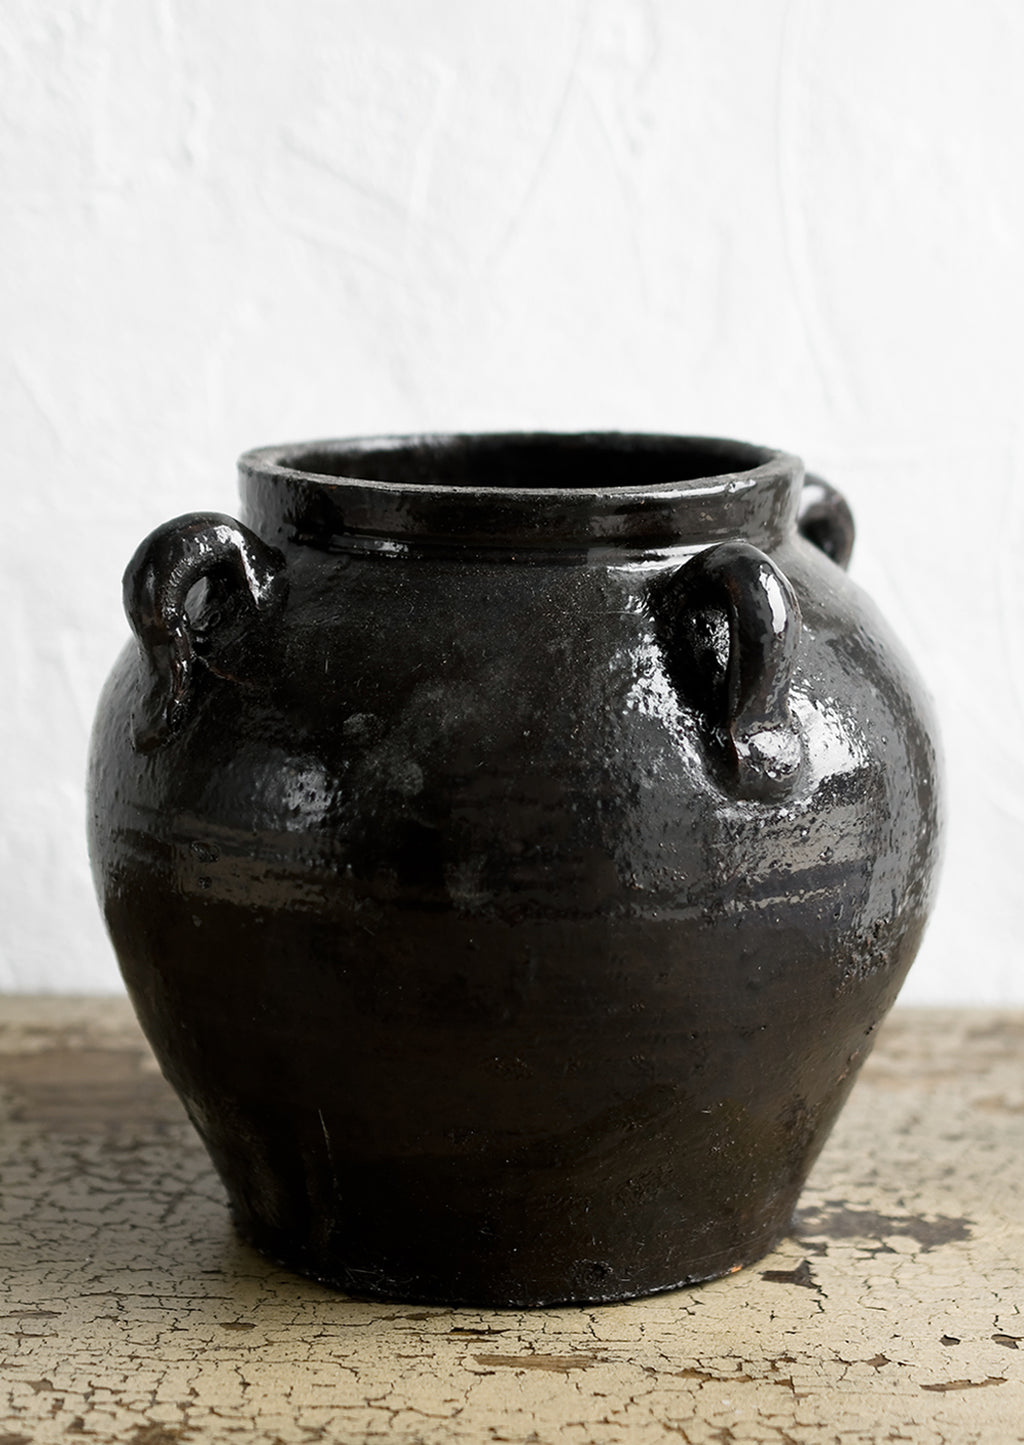 2: A dark brown (almost black) ceramic jar with decorative loop handles.